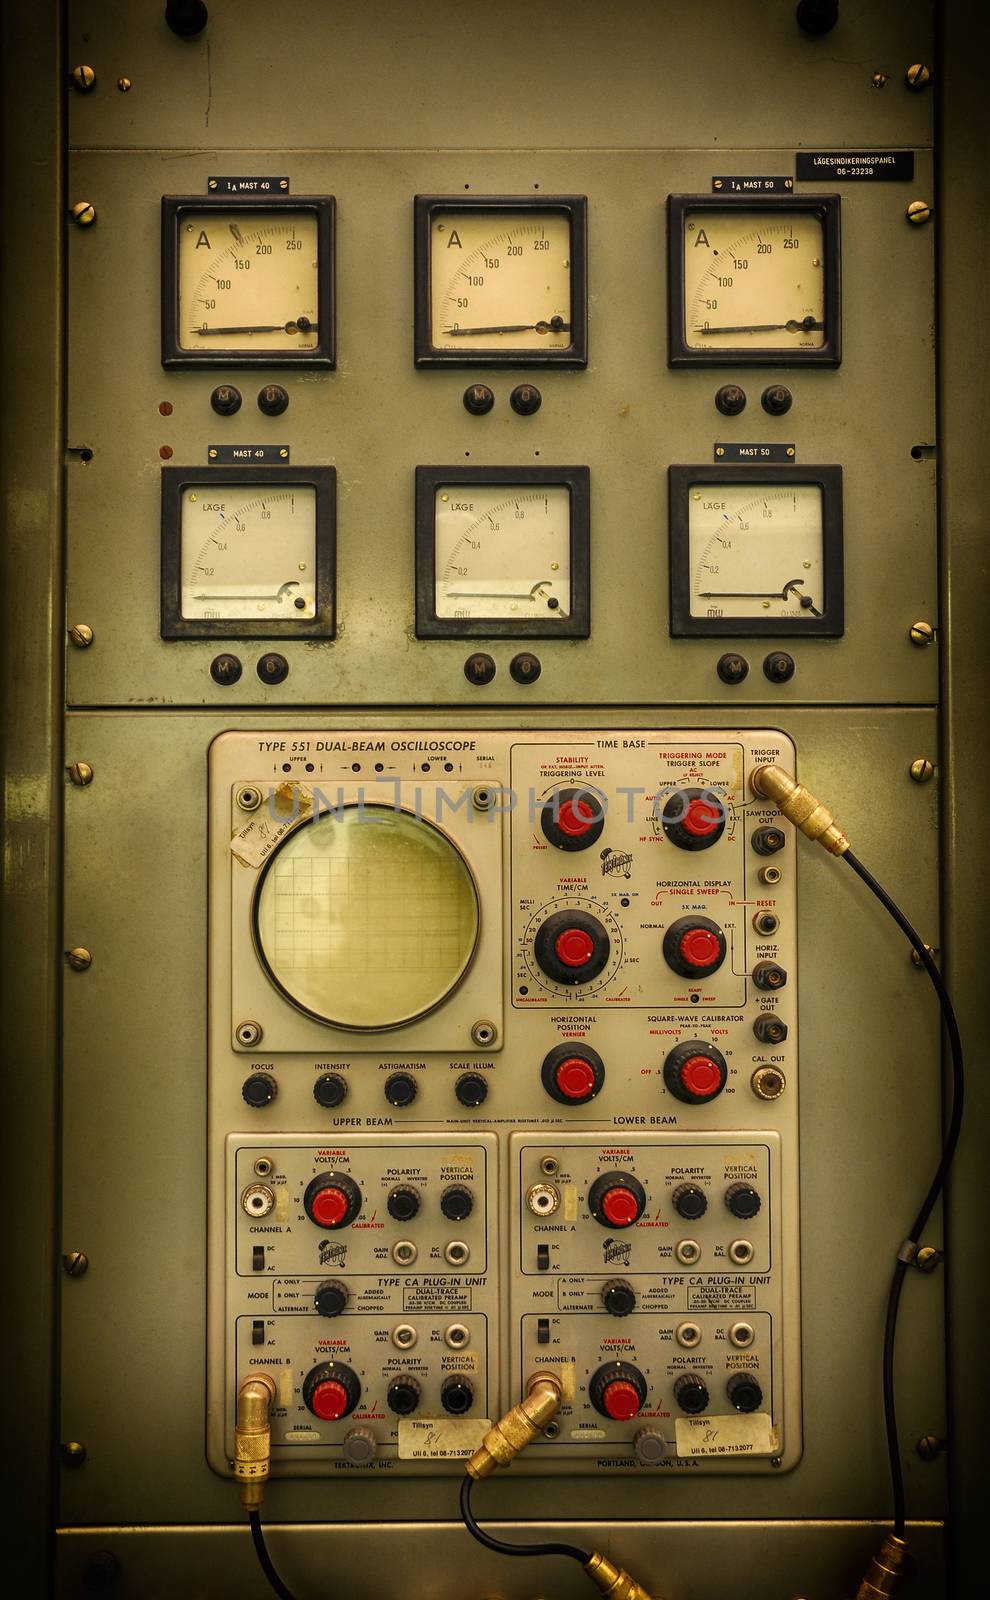 Mixer panel at retro analog radio station.